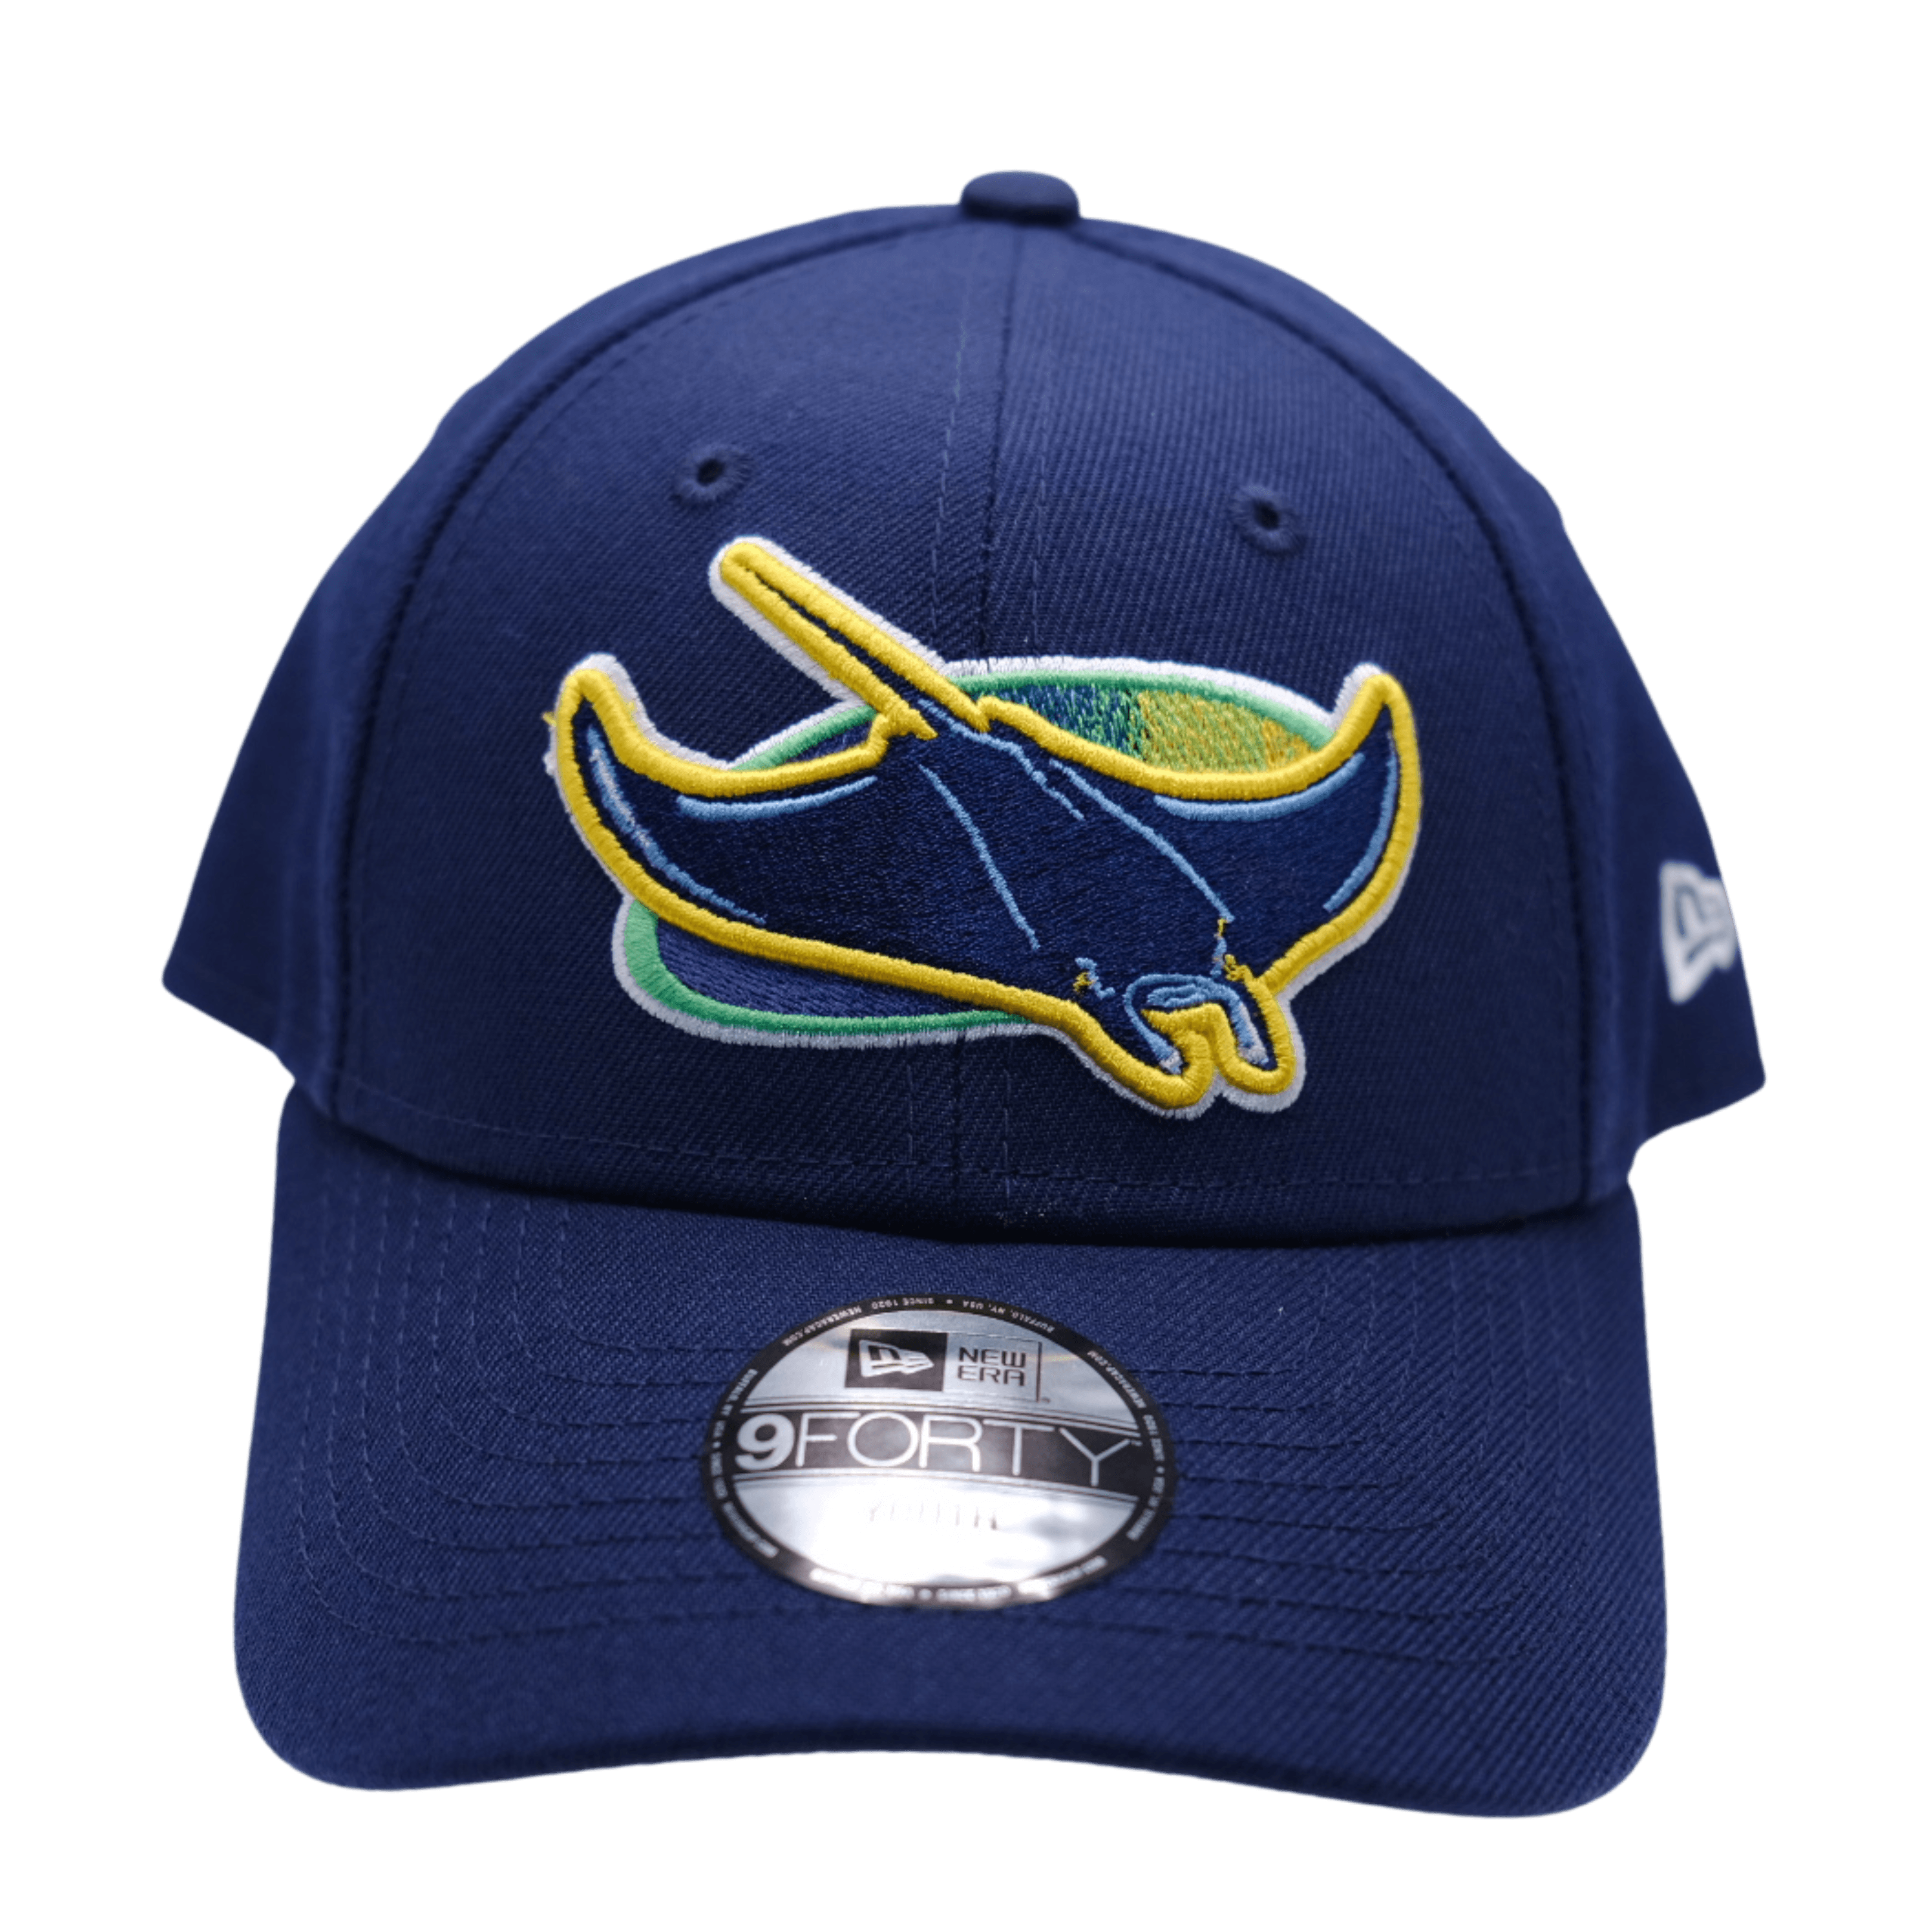 Tampa Bay Rays Kids Baseball Hats | The Bay Republic